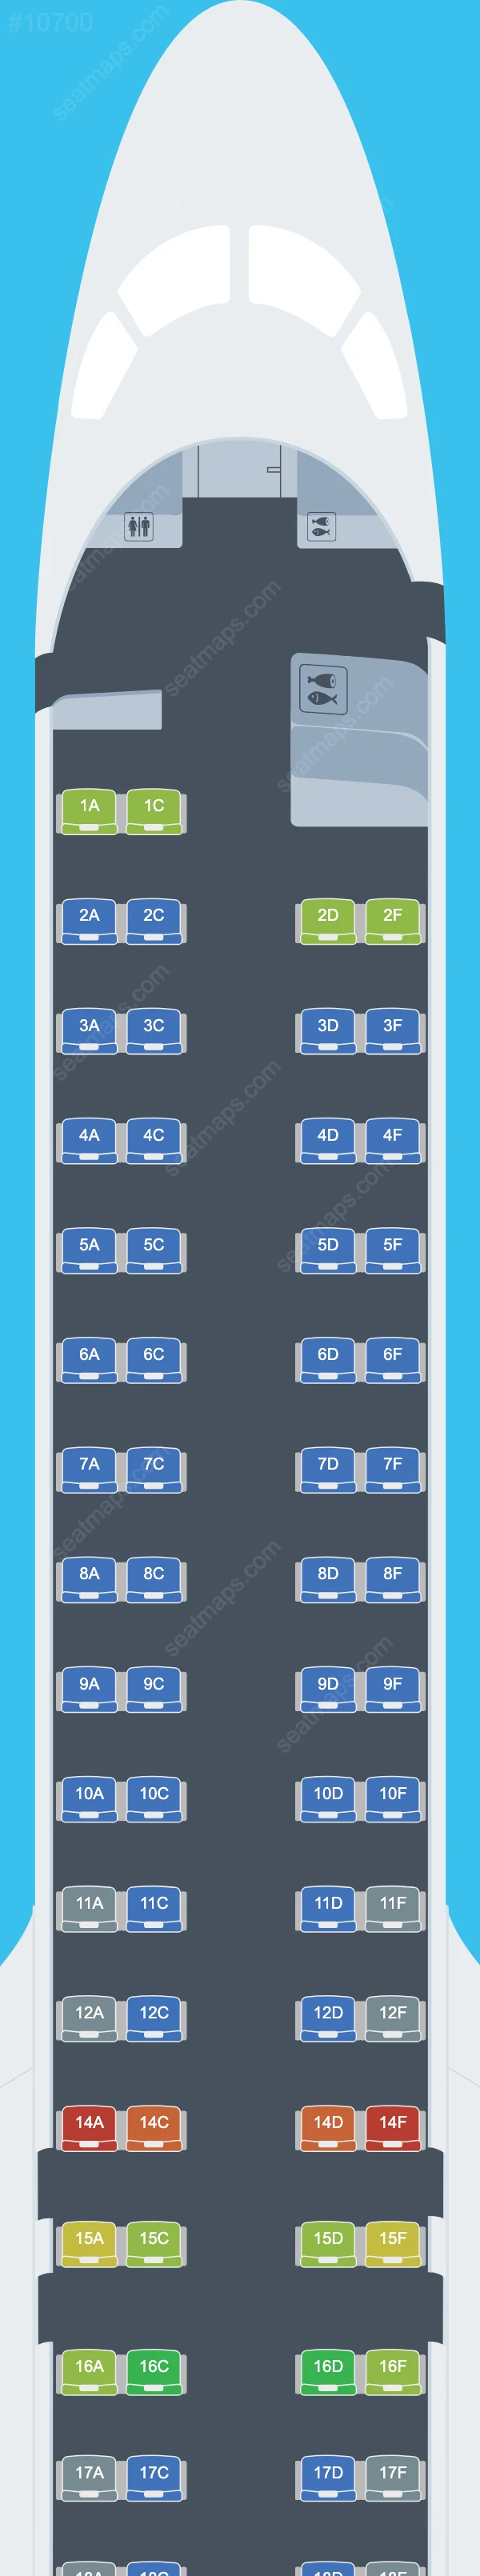 Helvetic Airways Embraer E195-E2 Seat Maps E195 E2